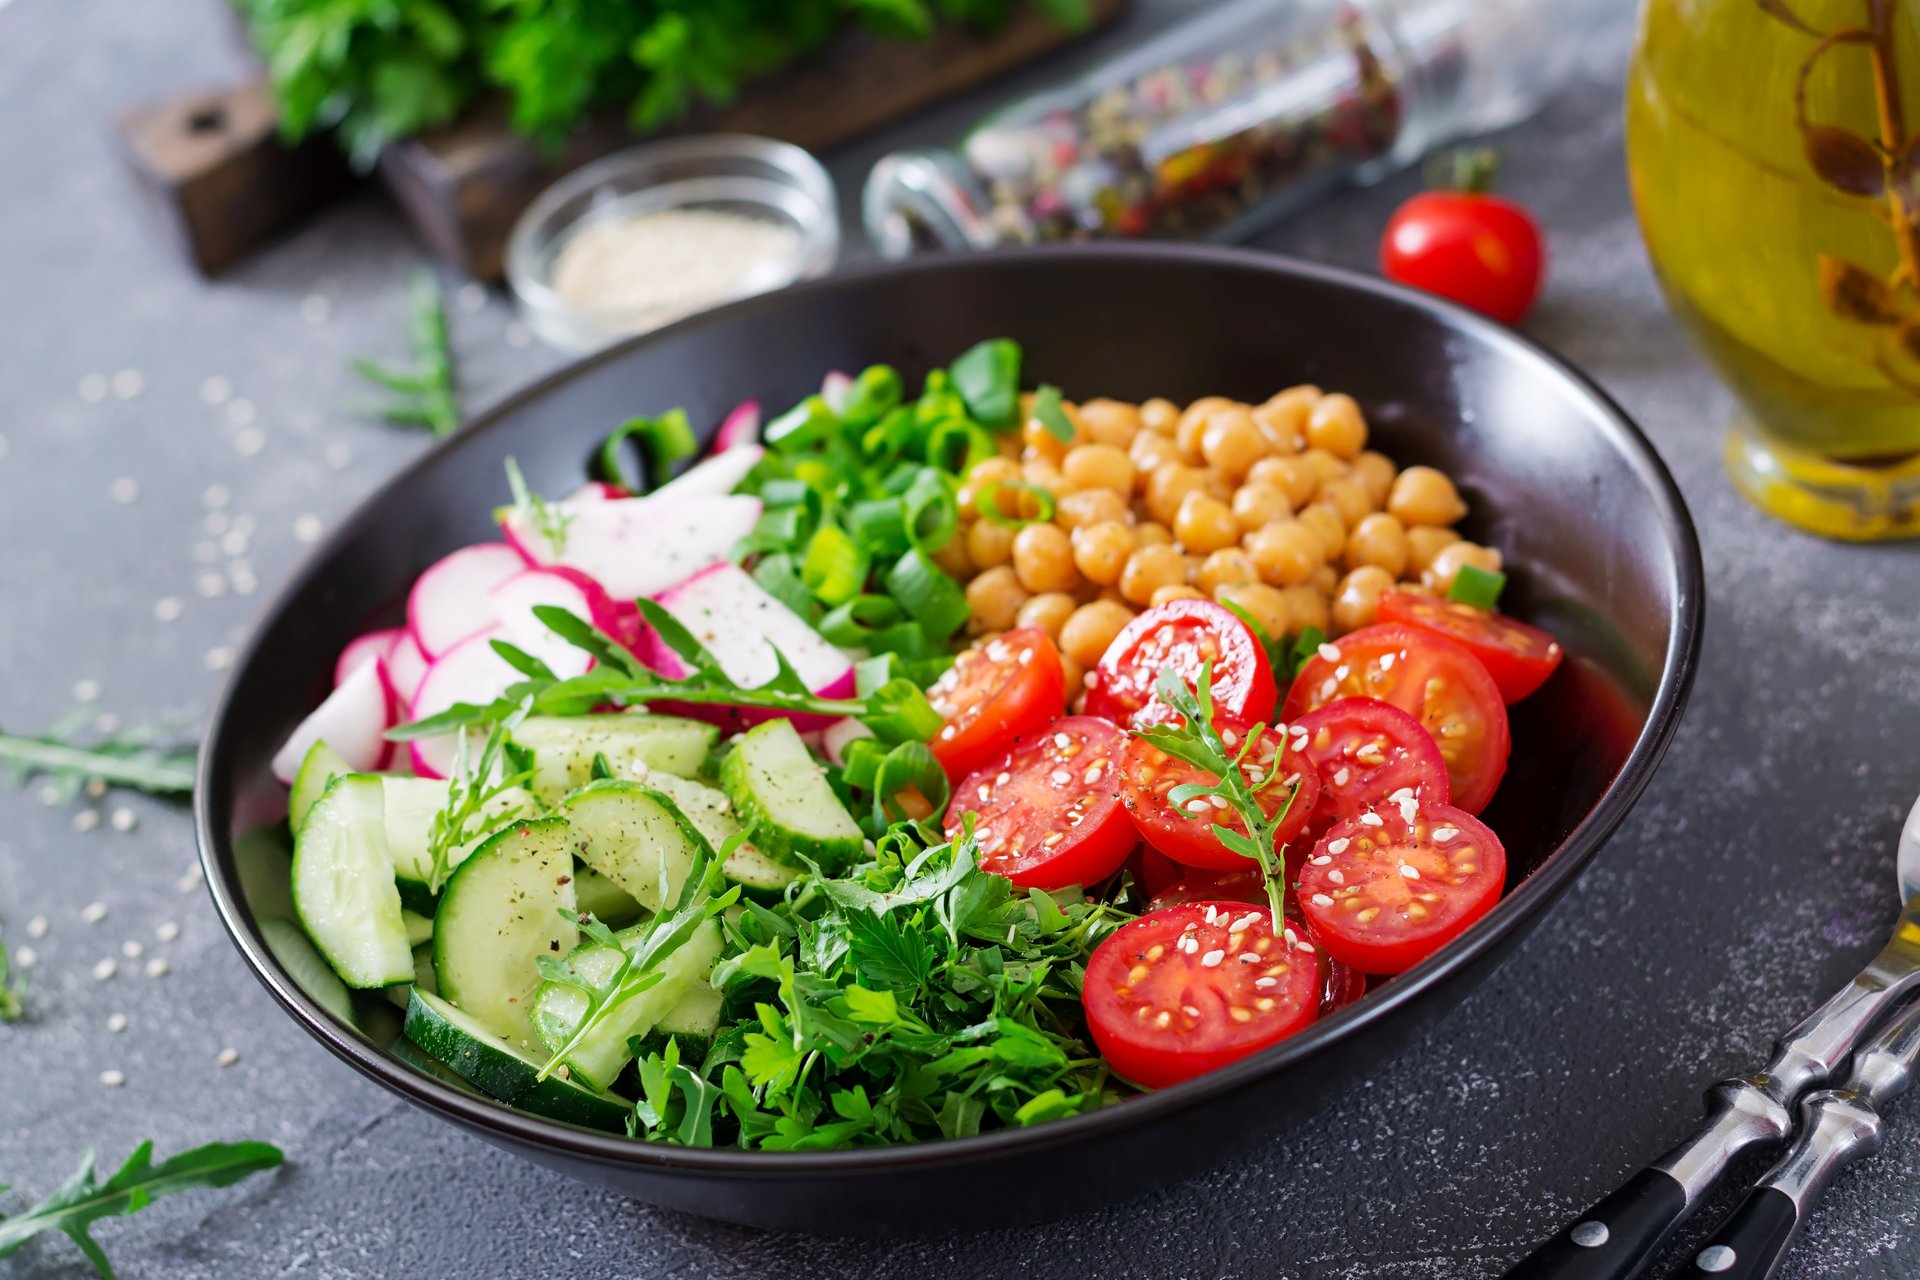 salad-of-chickpeas-tomatoes-cucumbers-radish-and-greens-dietary-food-buddha-bowl-vegan-salad